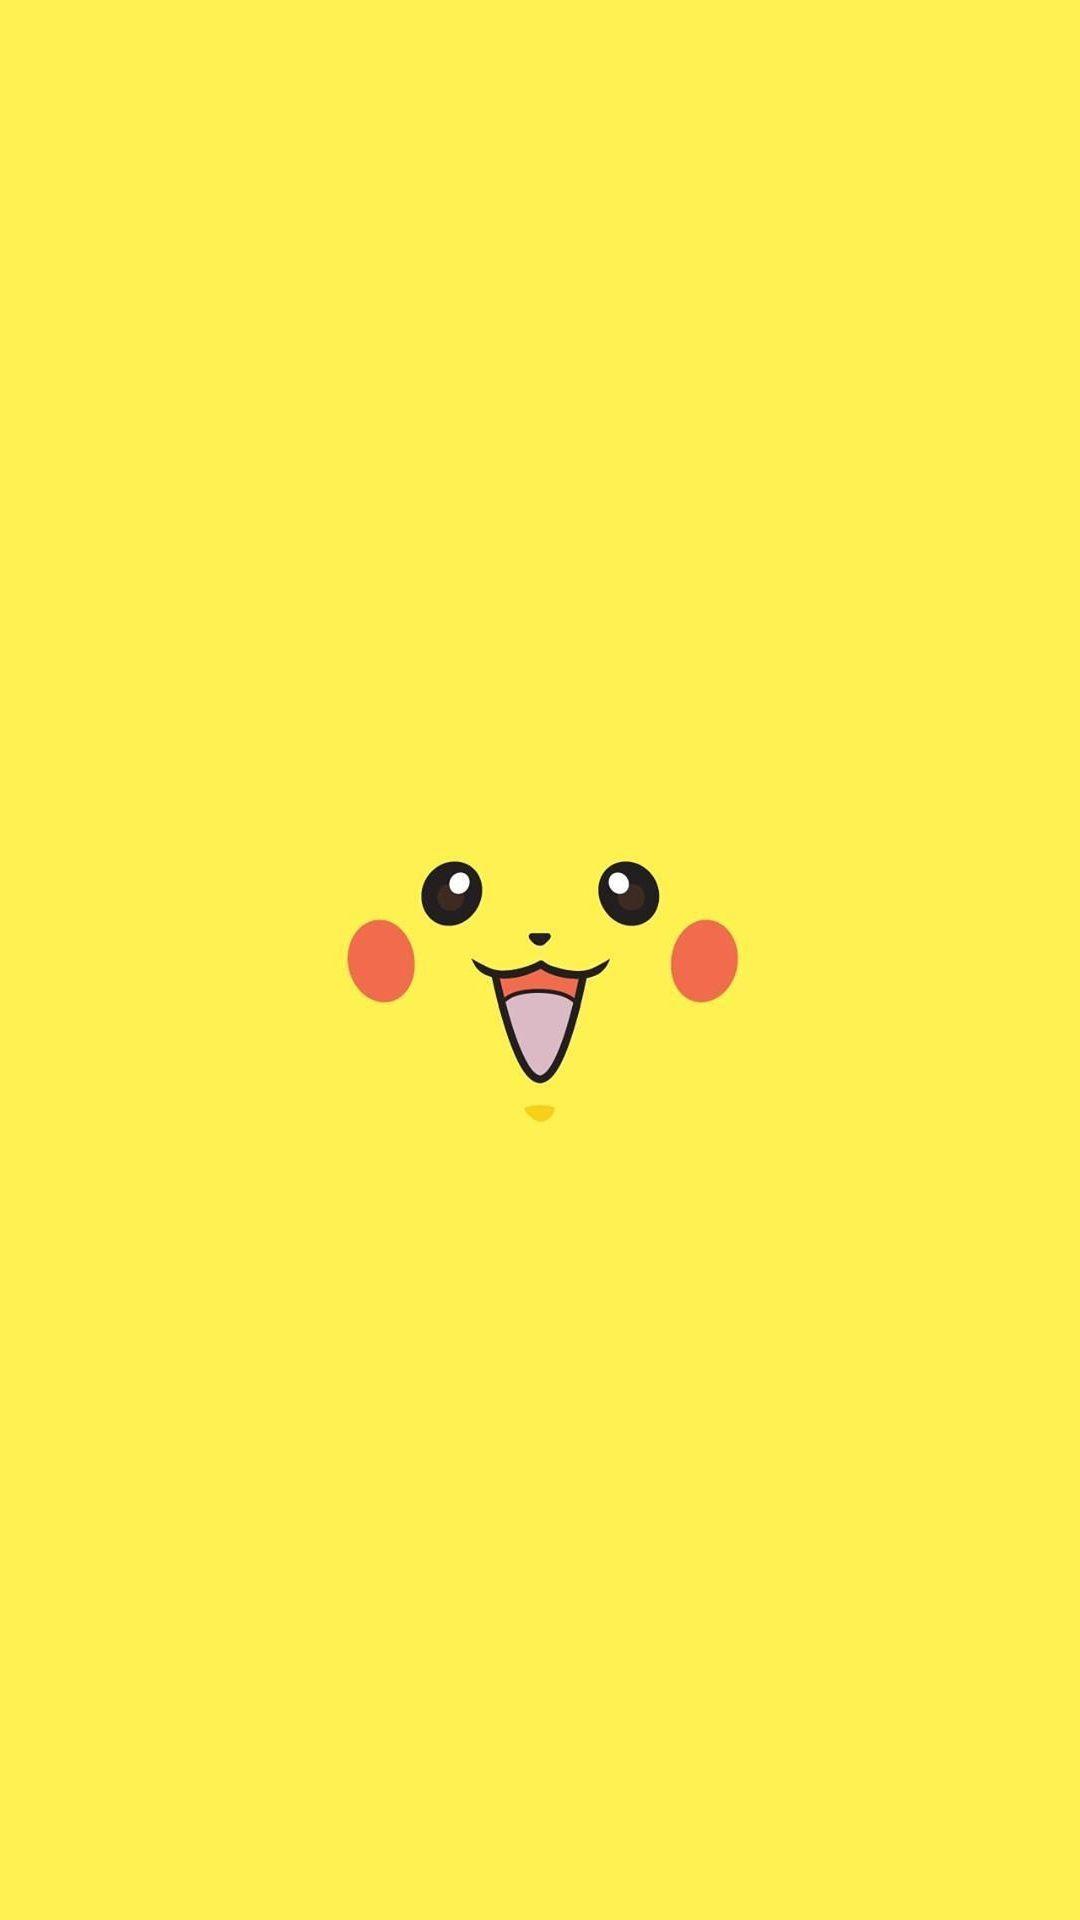 Pikachu Pokemon Go Character Minimal Android Wallpaper